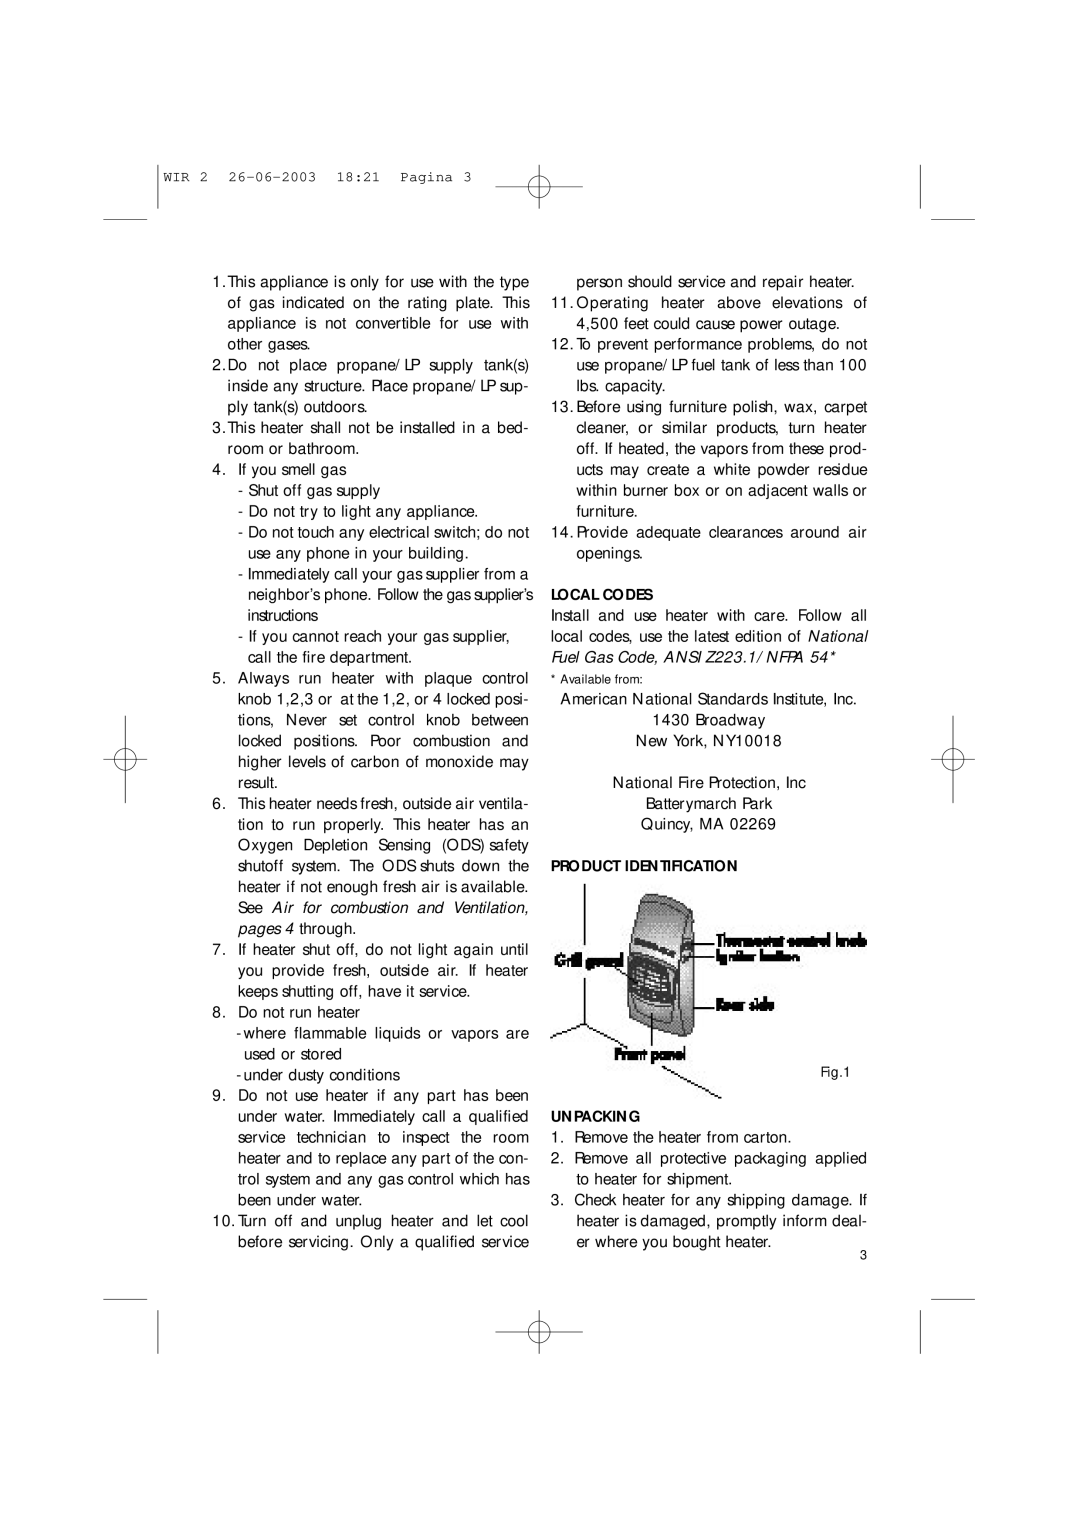 DeLonghi WIR2, WIR1 manual 